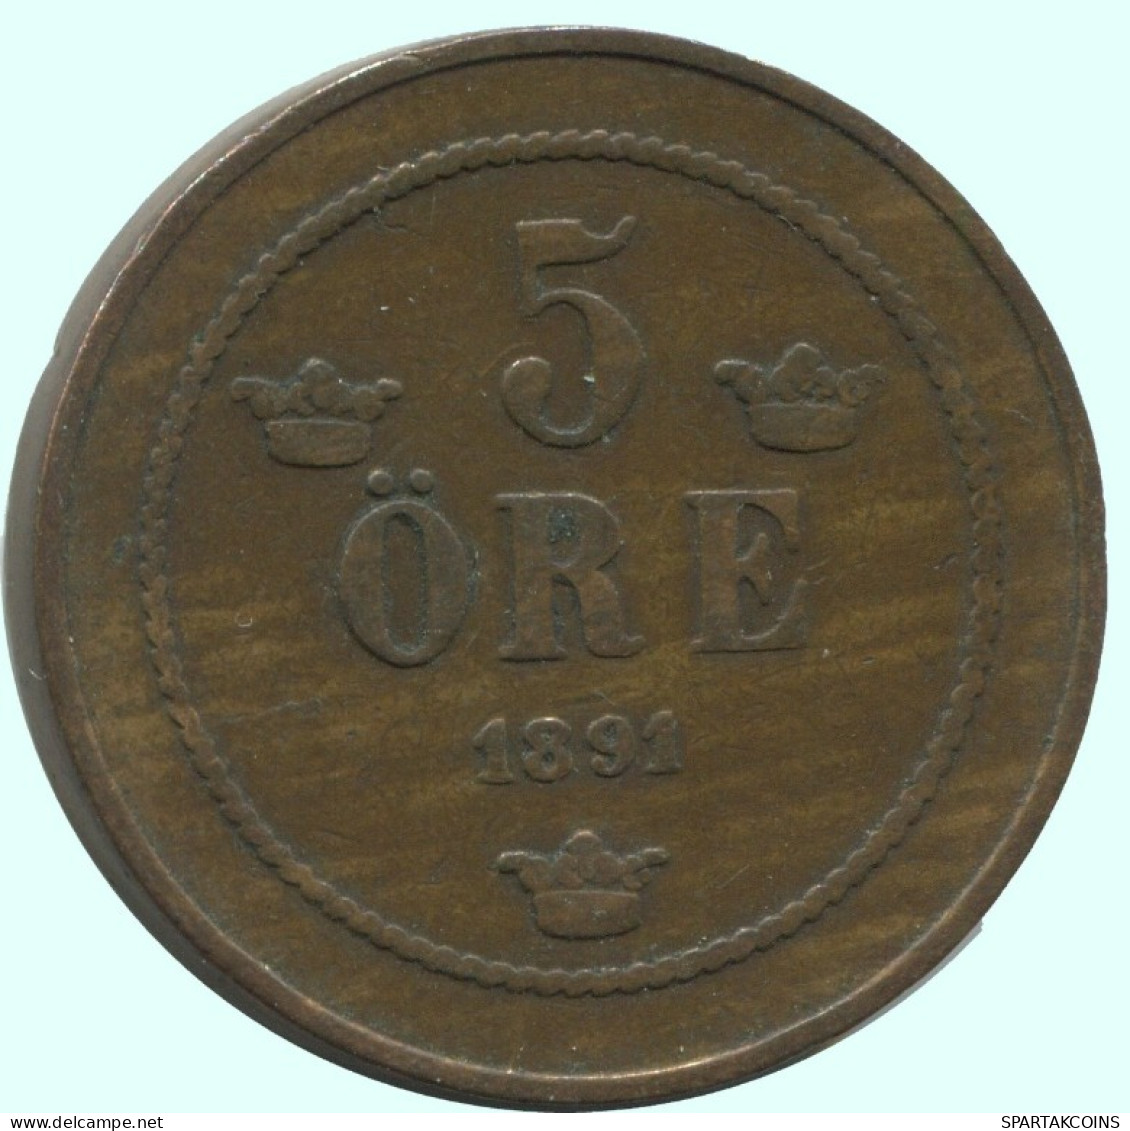 5 ORE 1891 SUECIA SWEDEN Moneda #AC647.2.E.A - Sweden